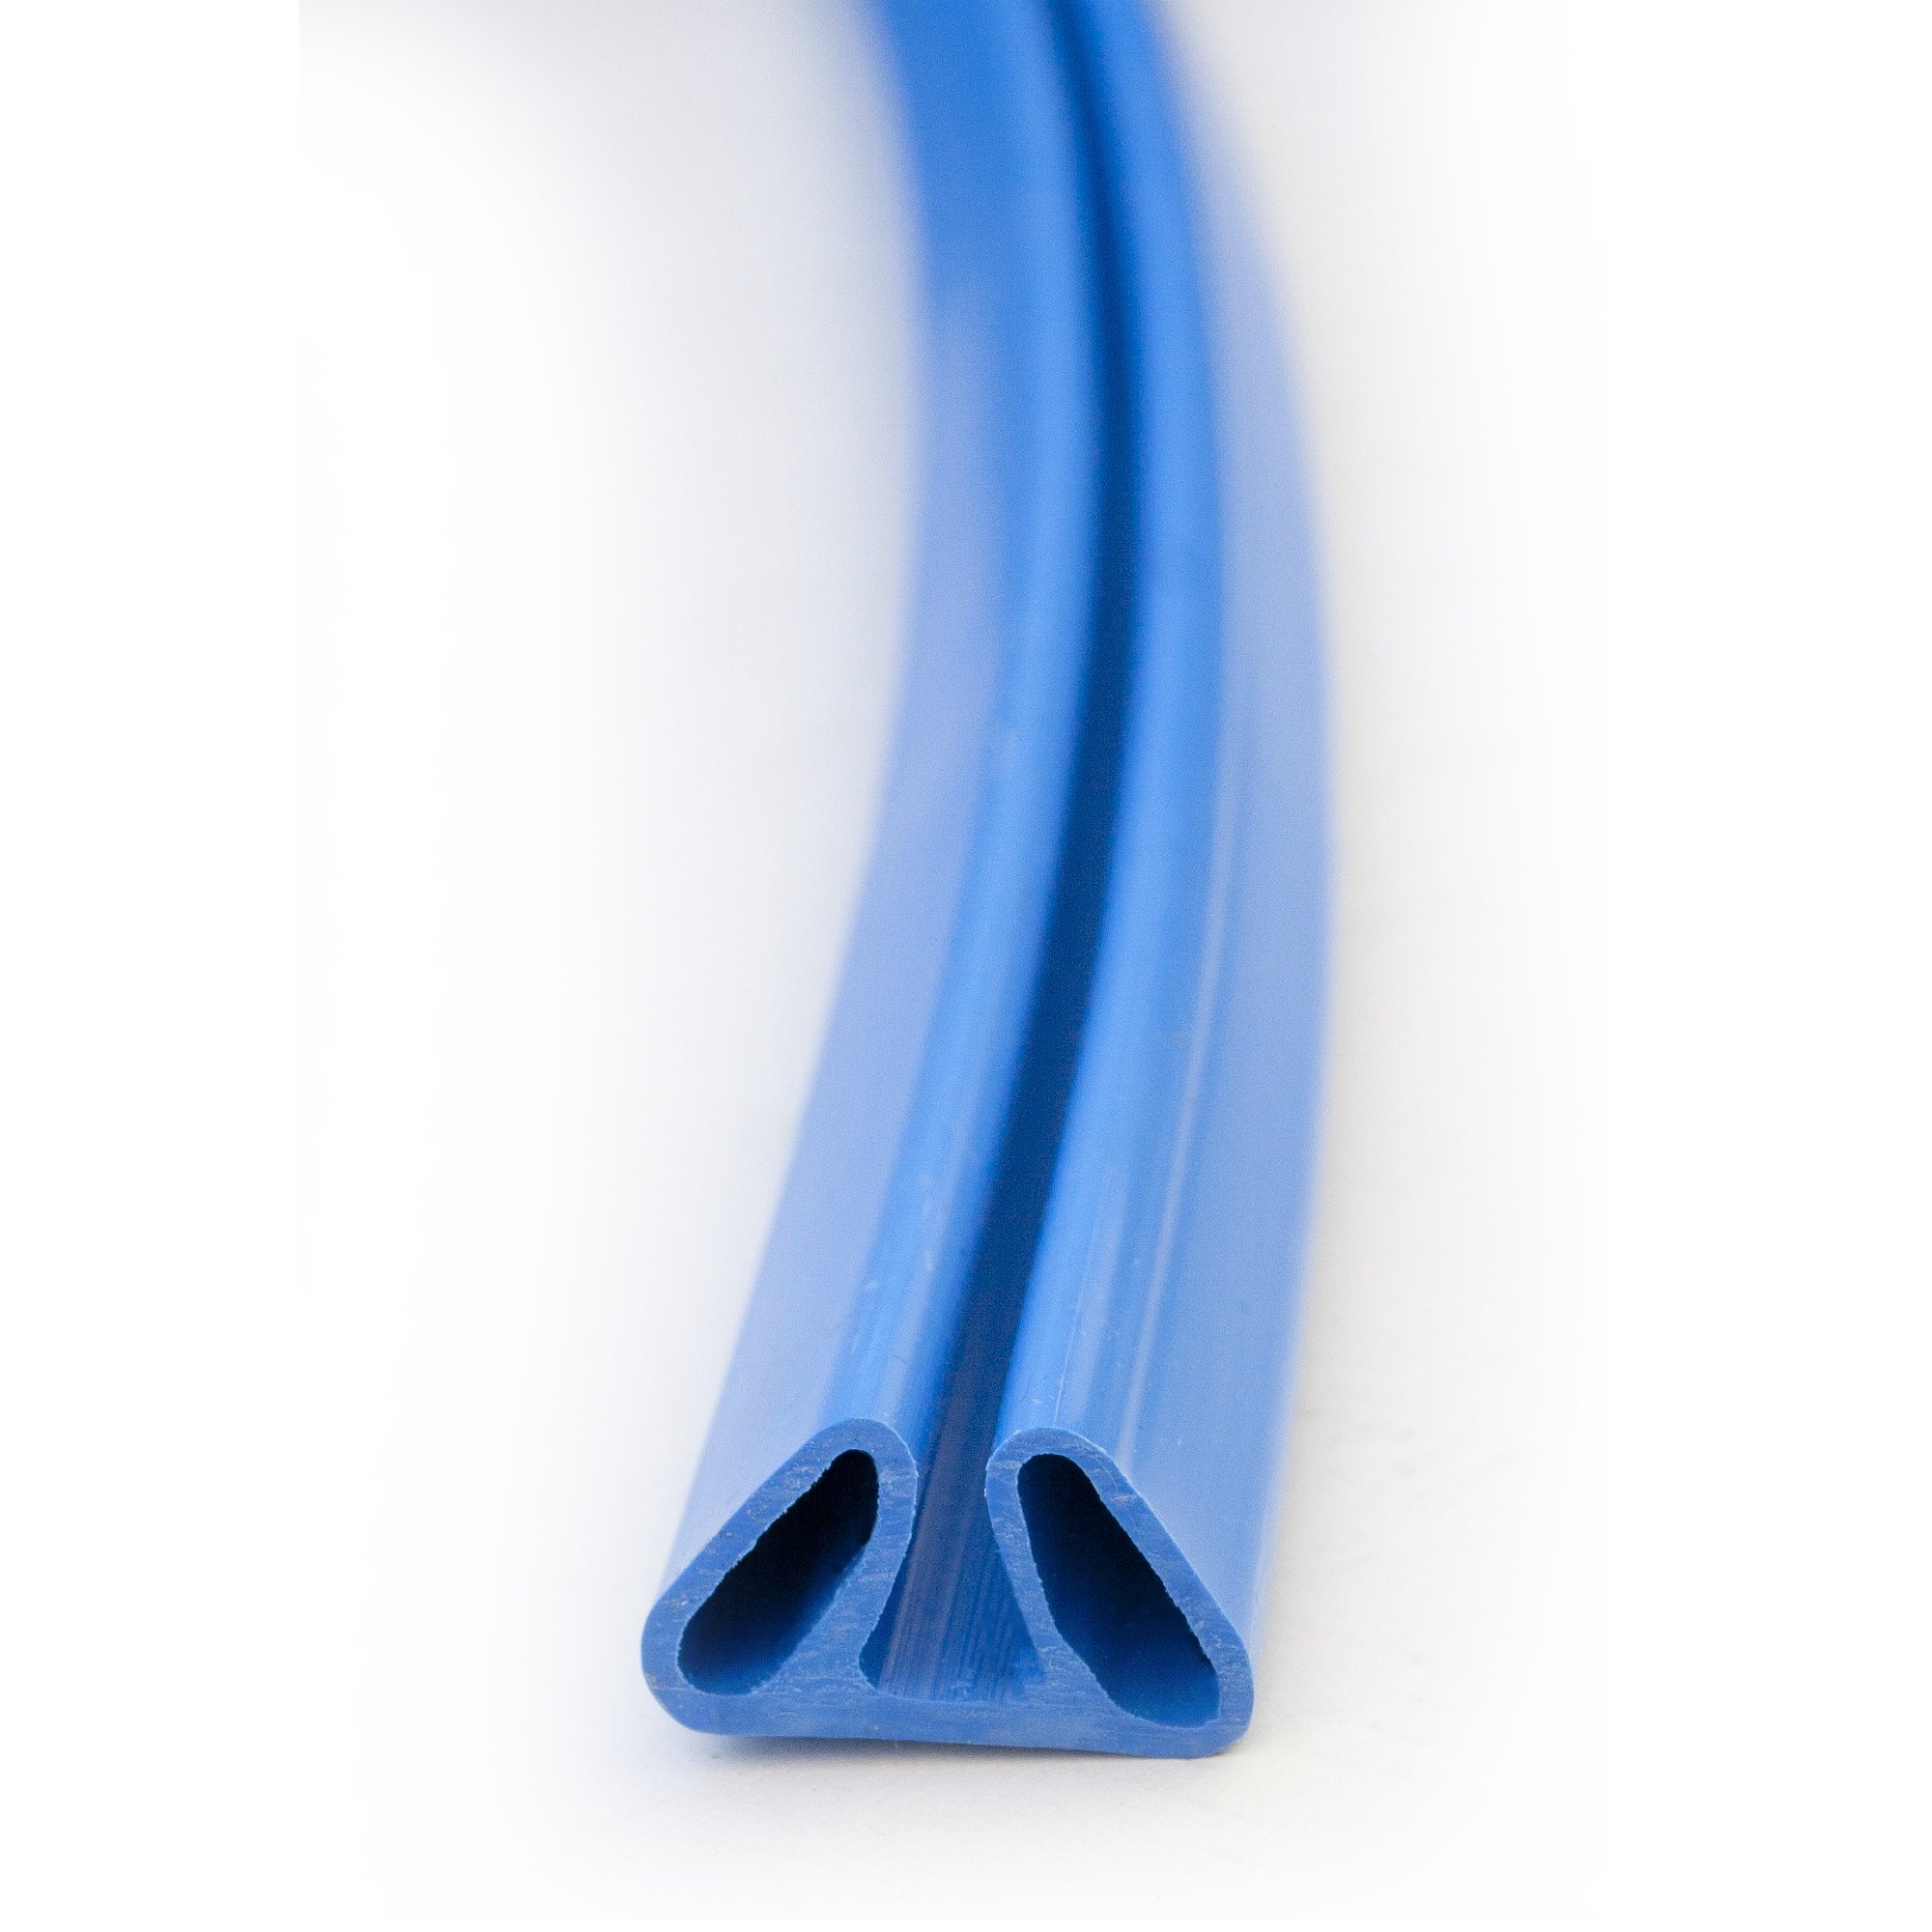 Stahlwandpool Set (7-teilig) tief rund Bahrain 350 x 150 cm, Stahl 0,8 mm weiß Folie 0,6 mm blau